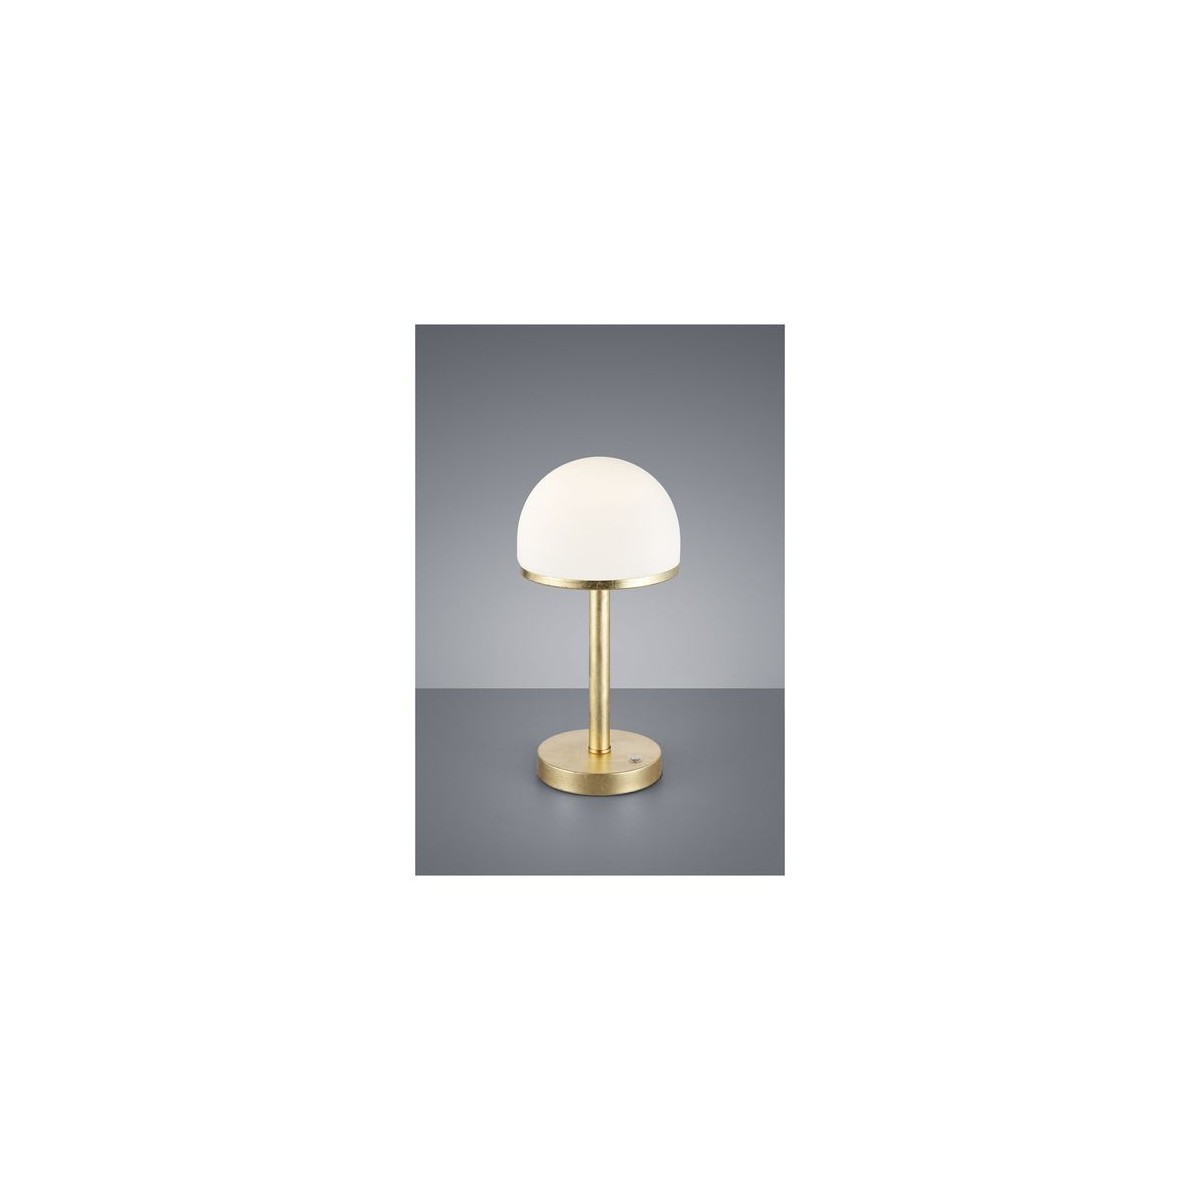 Lampe de table BERLIN de style industriel avec 1 ampoule incluse